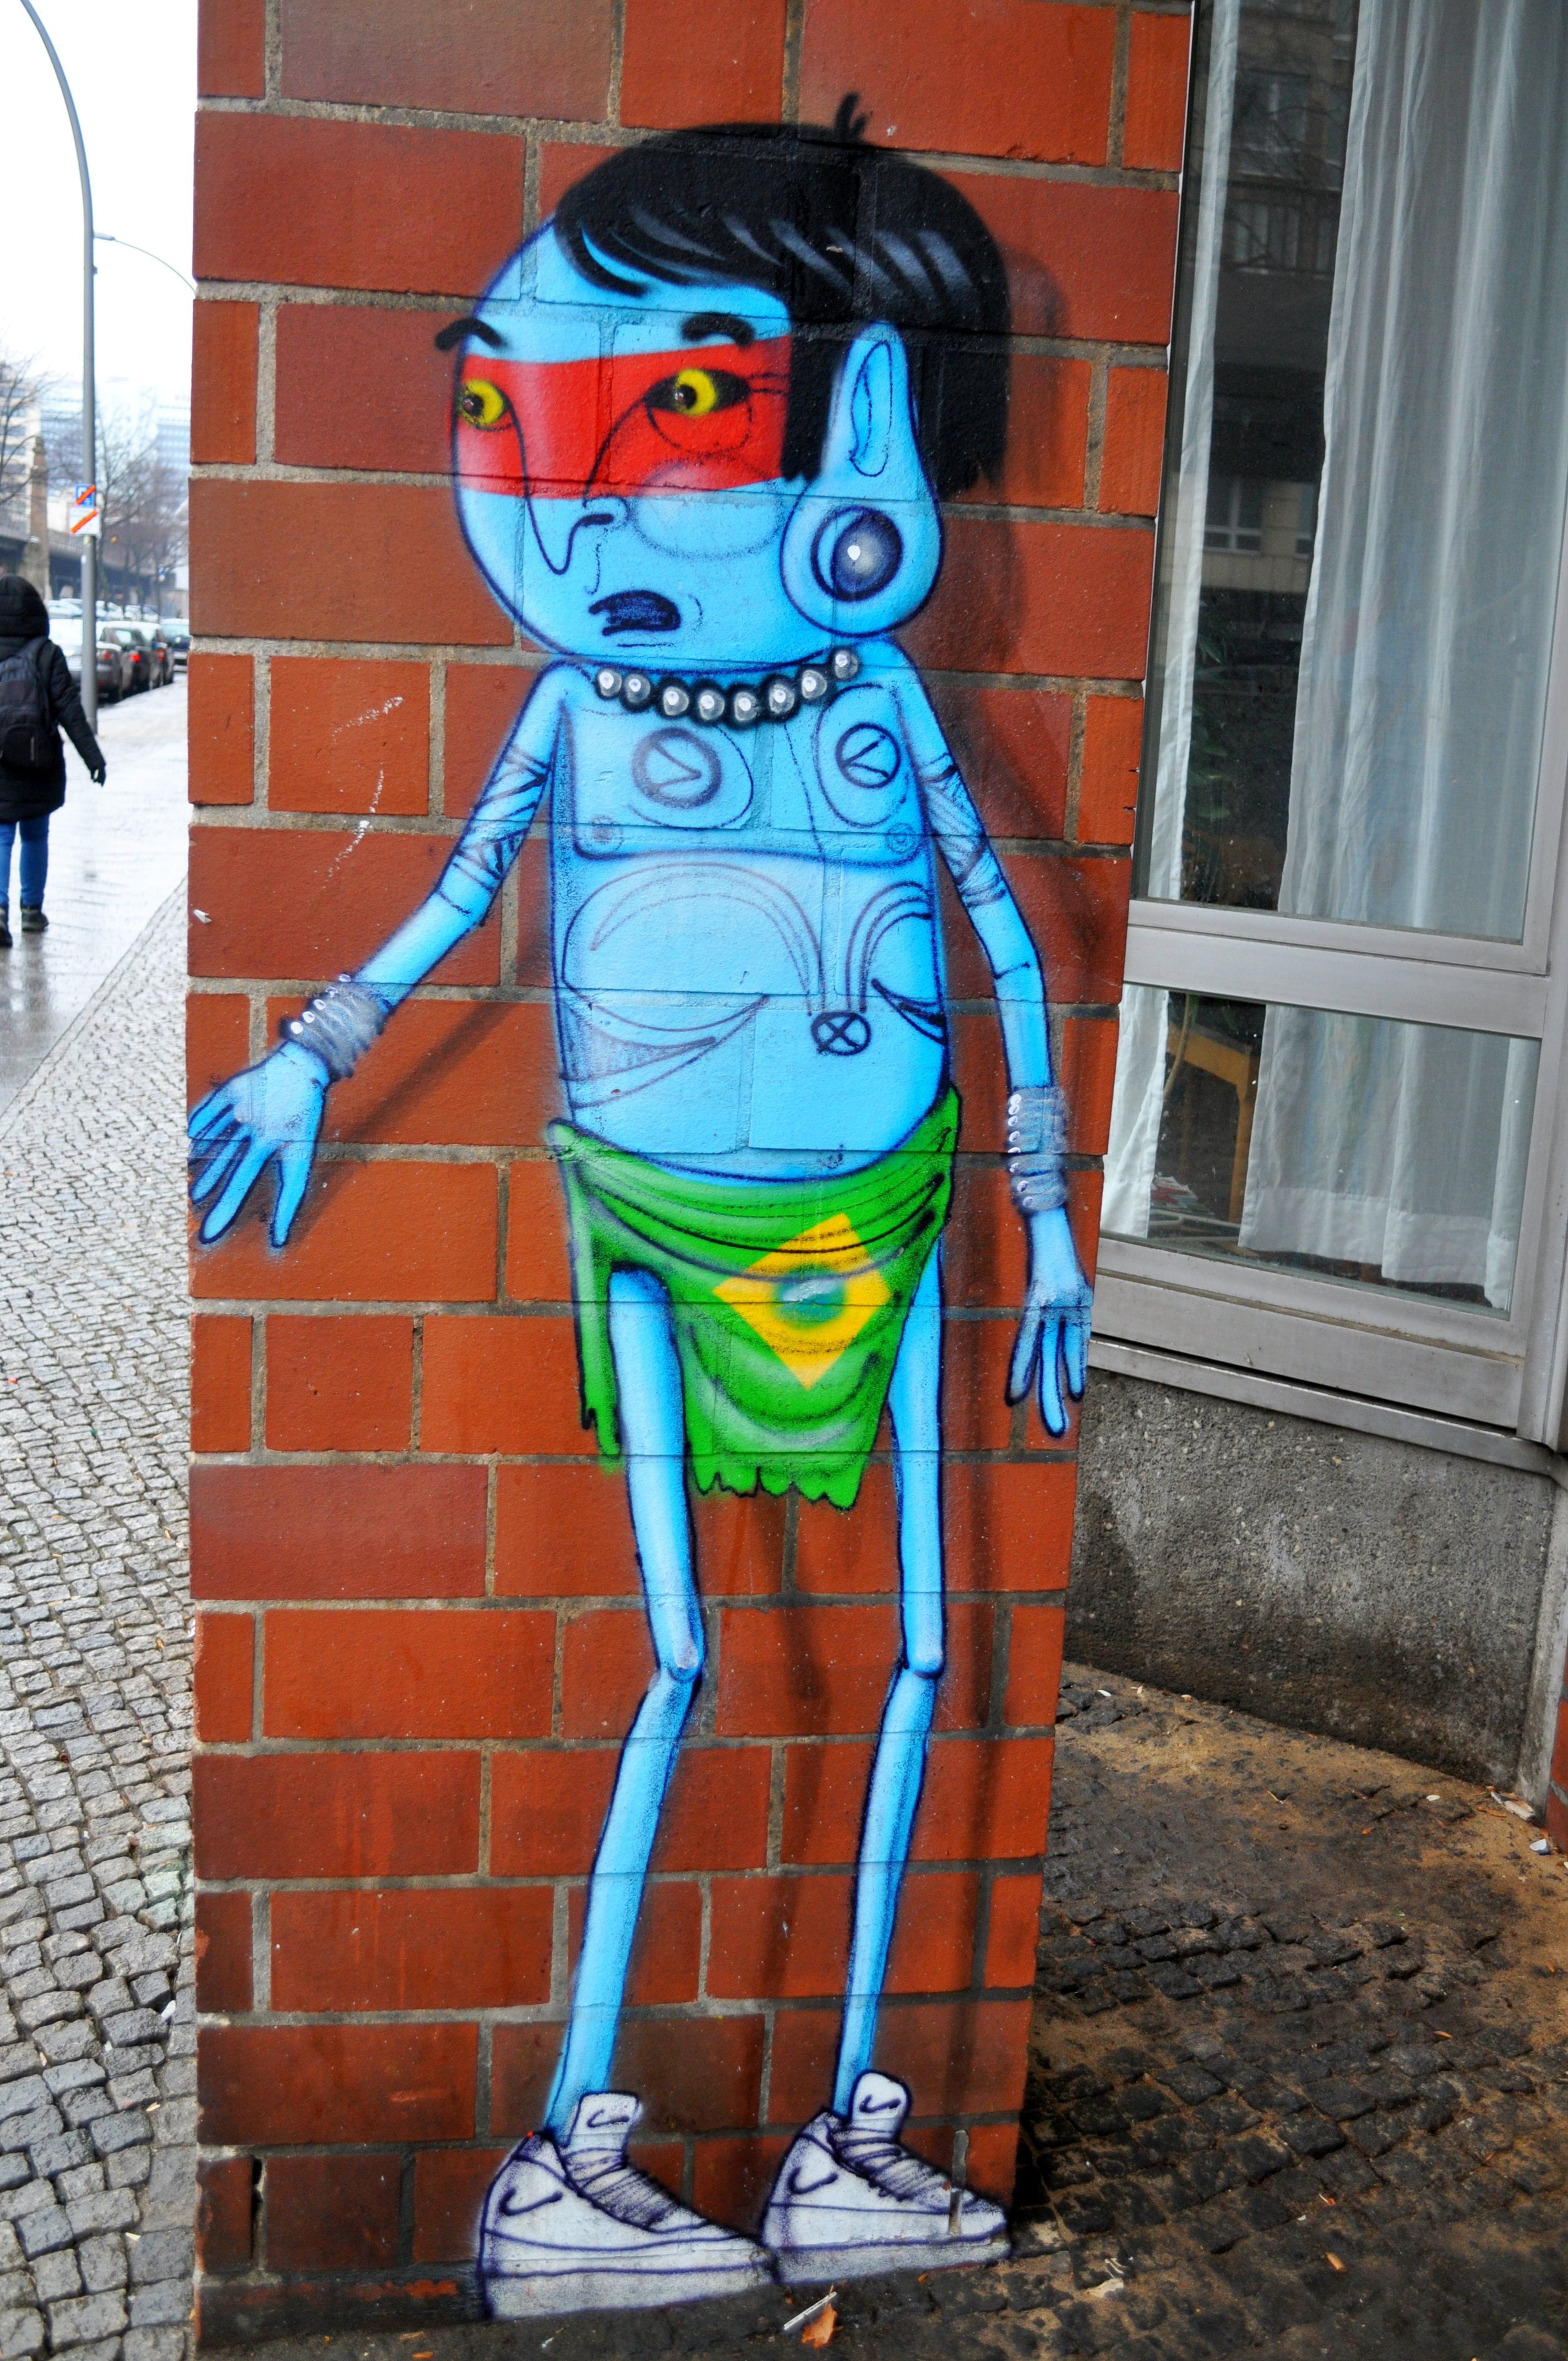 Graffiti 4738  by the artist Cranio captured by elettrotajik in Berlin Germany